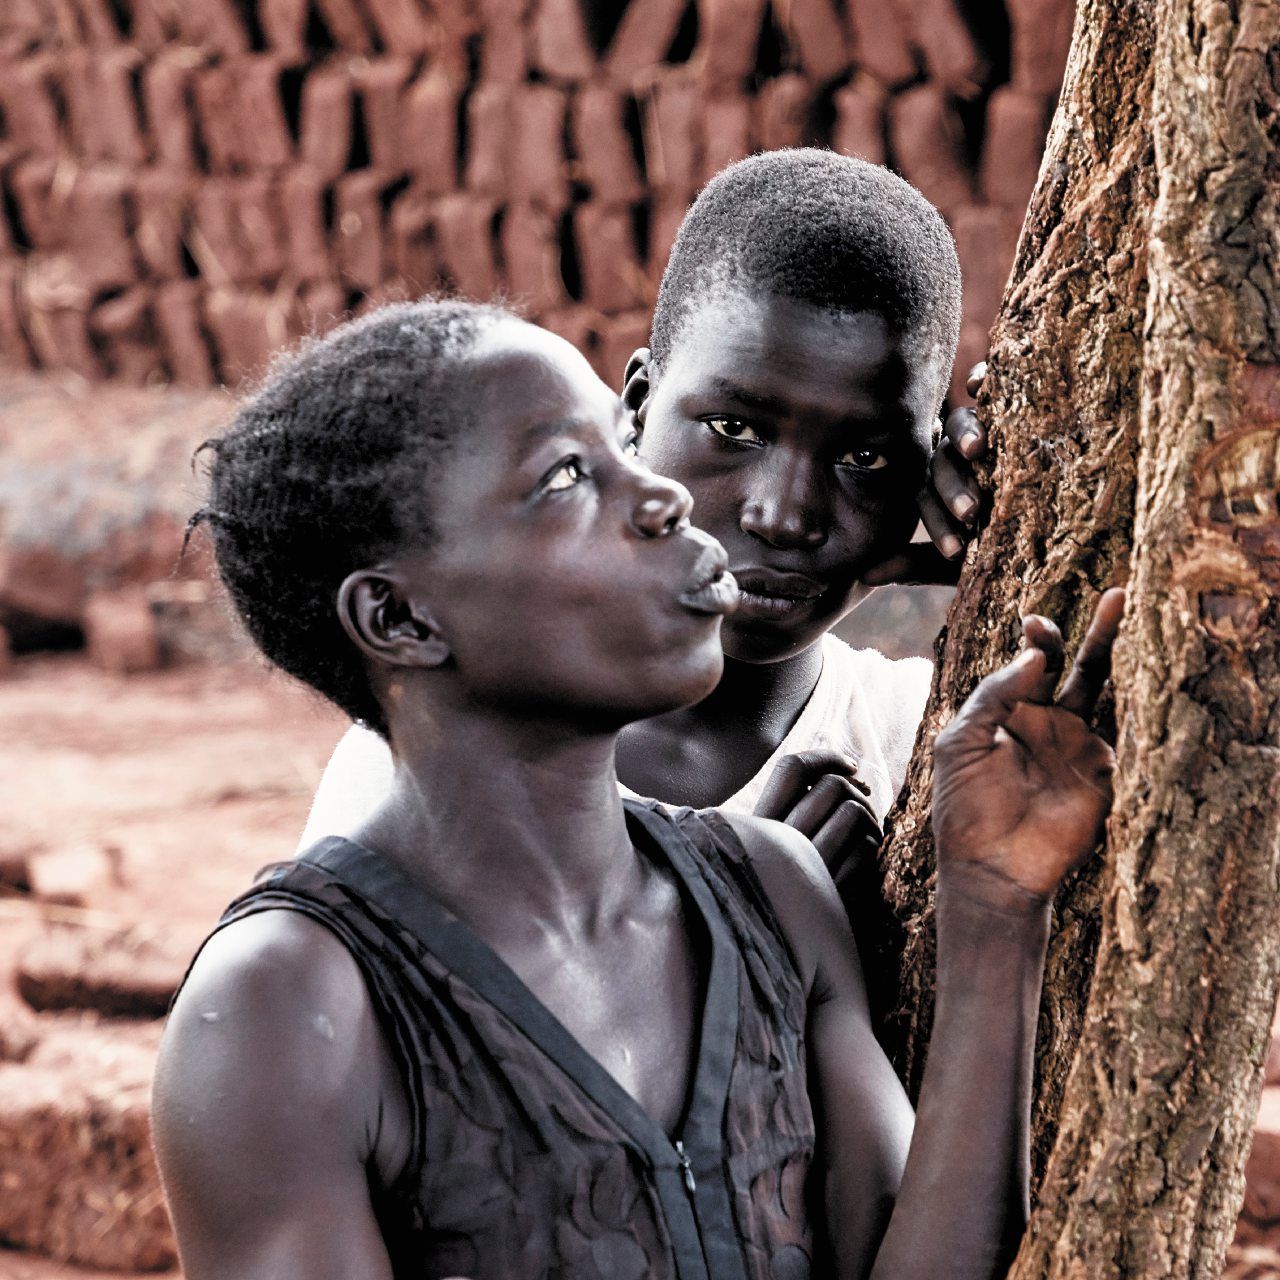 Viaggio in Uganda, tra i bambini di Gulu - immagine 5